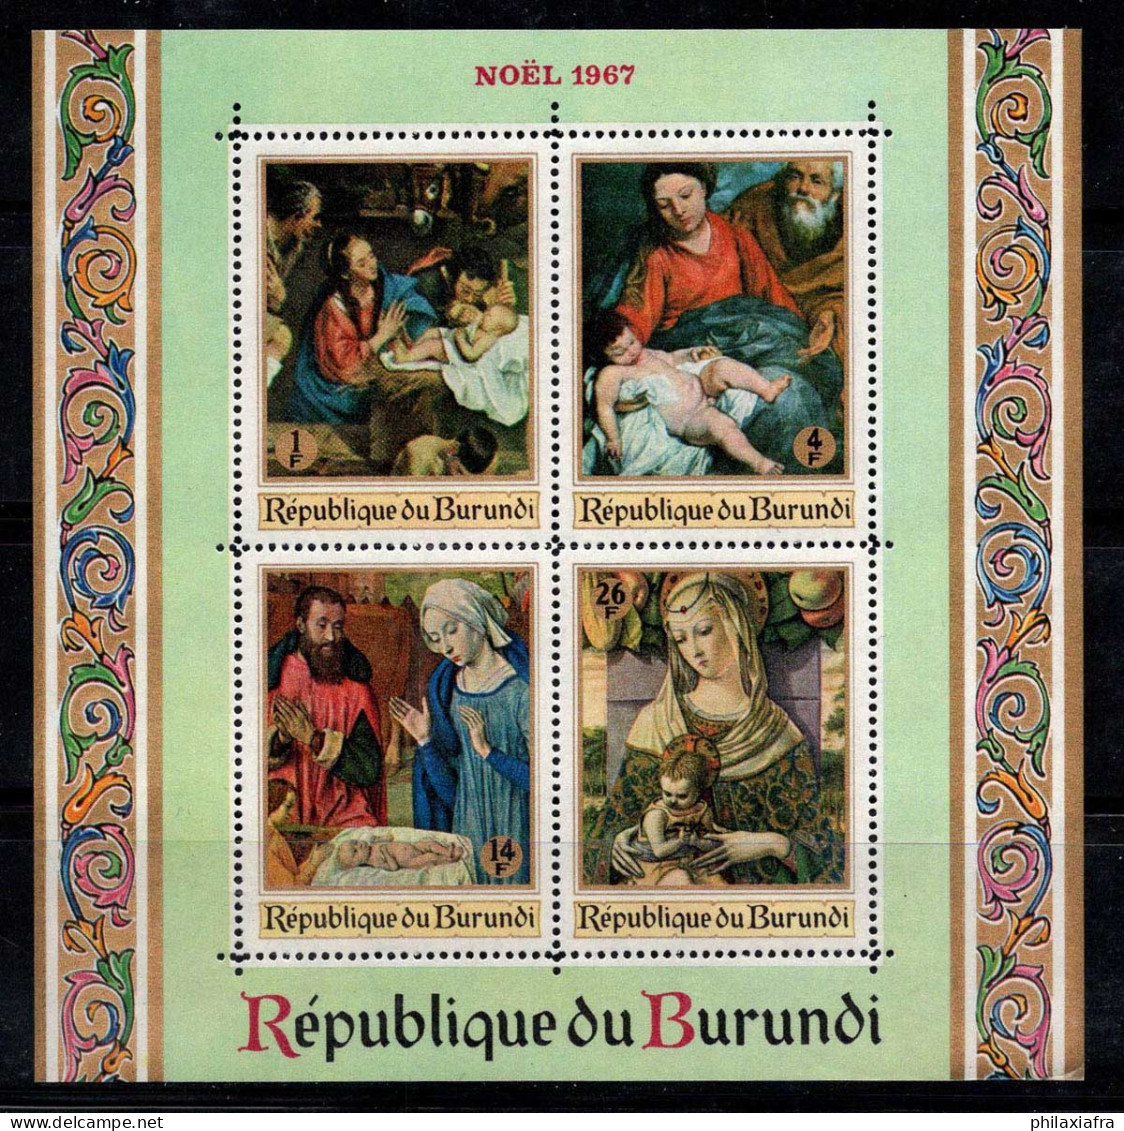 Burundi 1967 SG MS337 Bloc Feuillet 100% Neuf ** Noël, Peintures Religieuses - Neufs